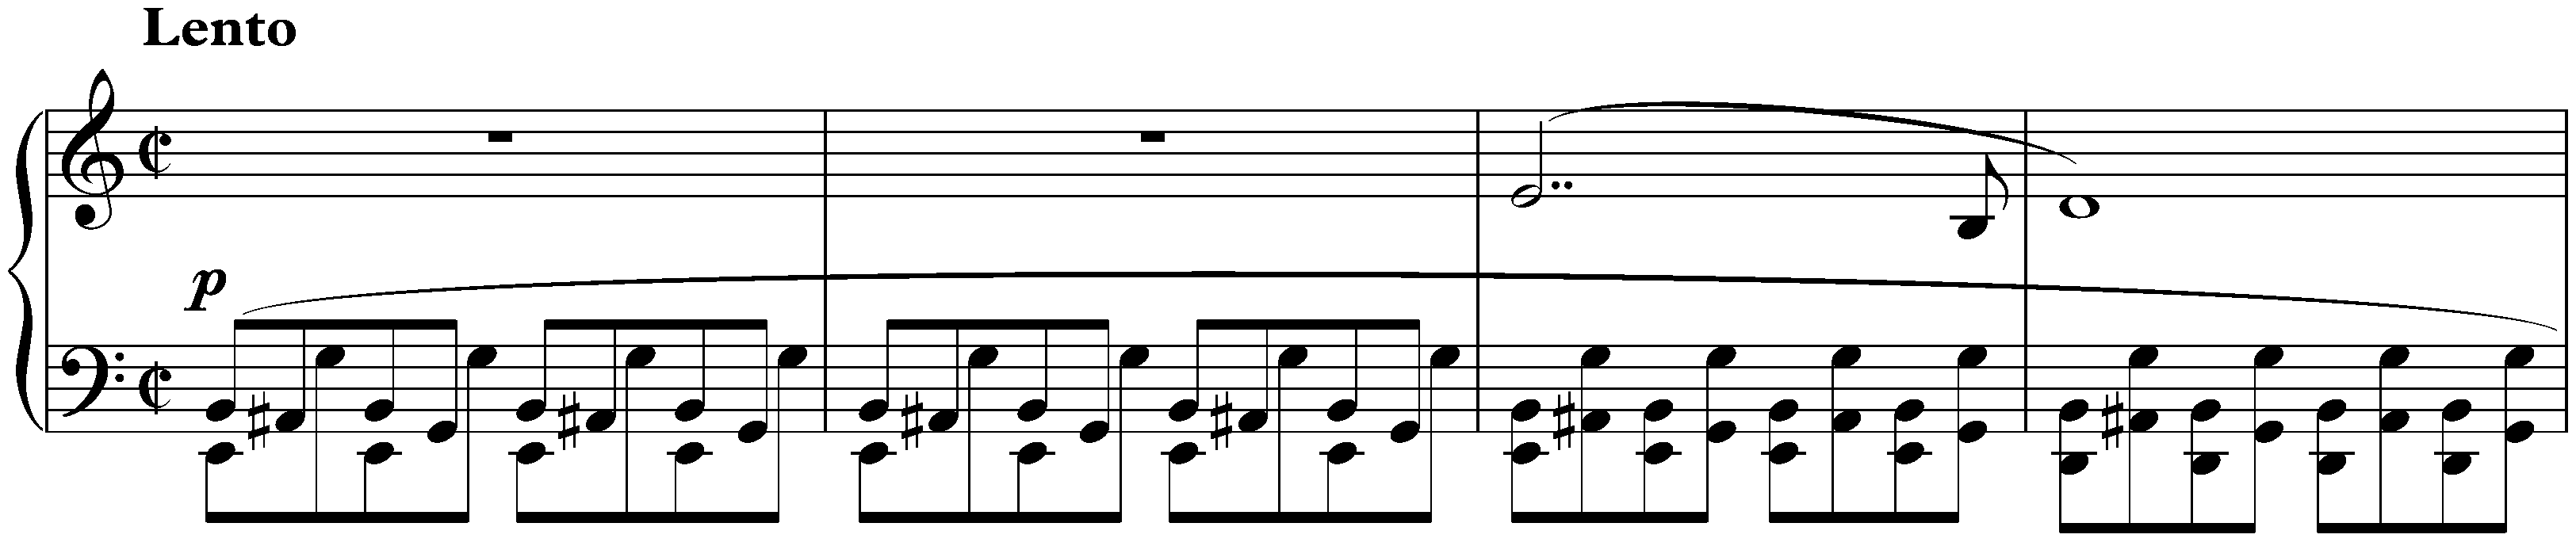 Twenty-four Préludes, op. 28; 2. A minor